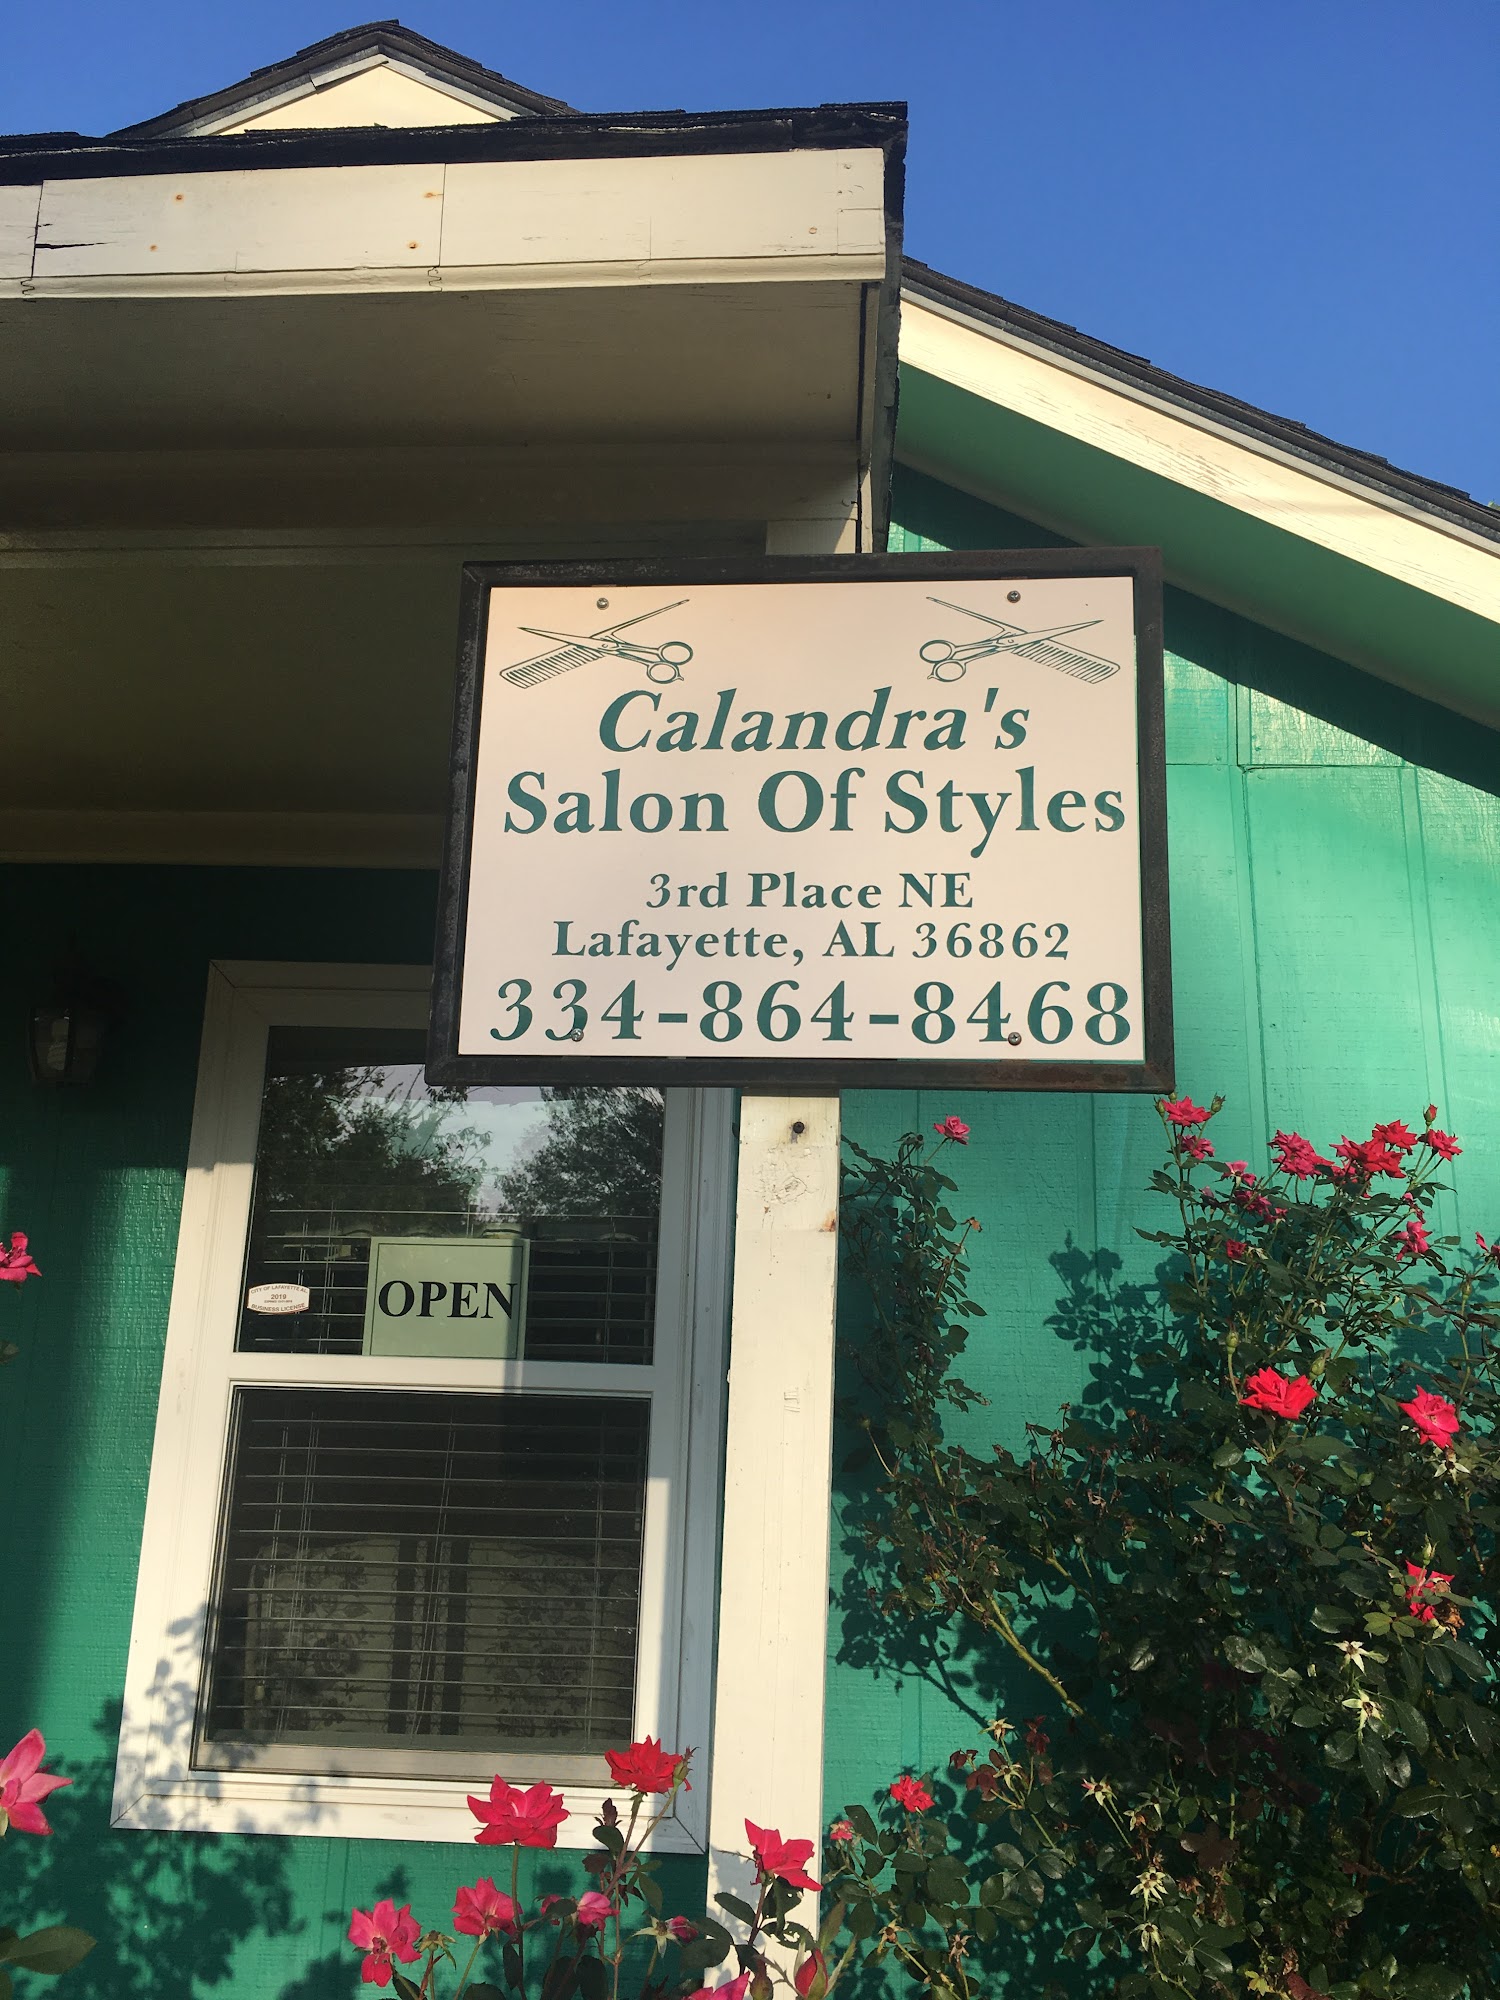 Calandra's Salon of Styles 1st Pl NE, La Fayette Alabama 36862